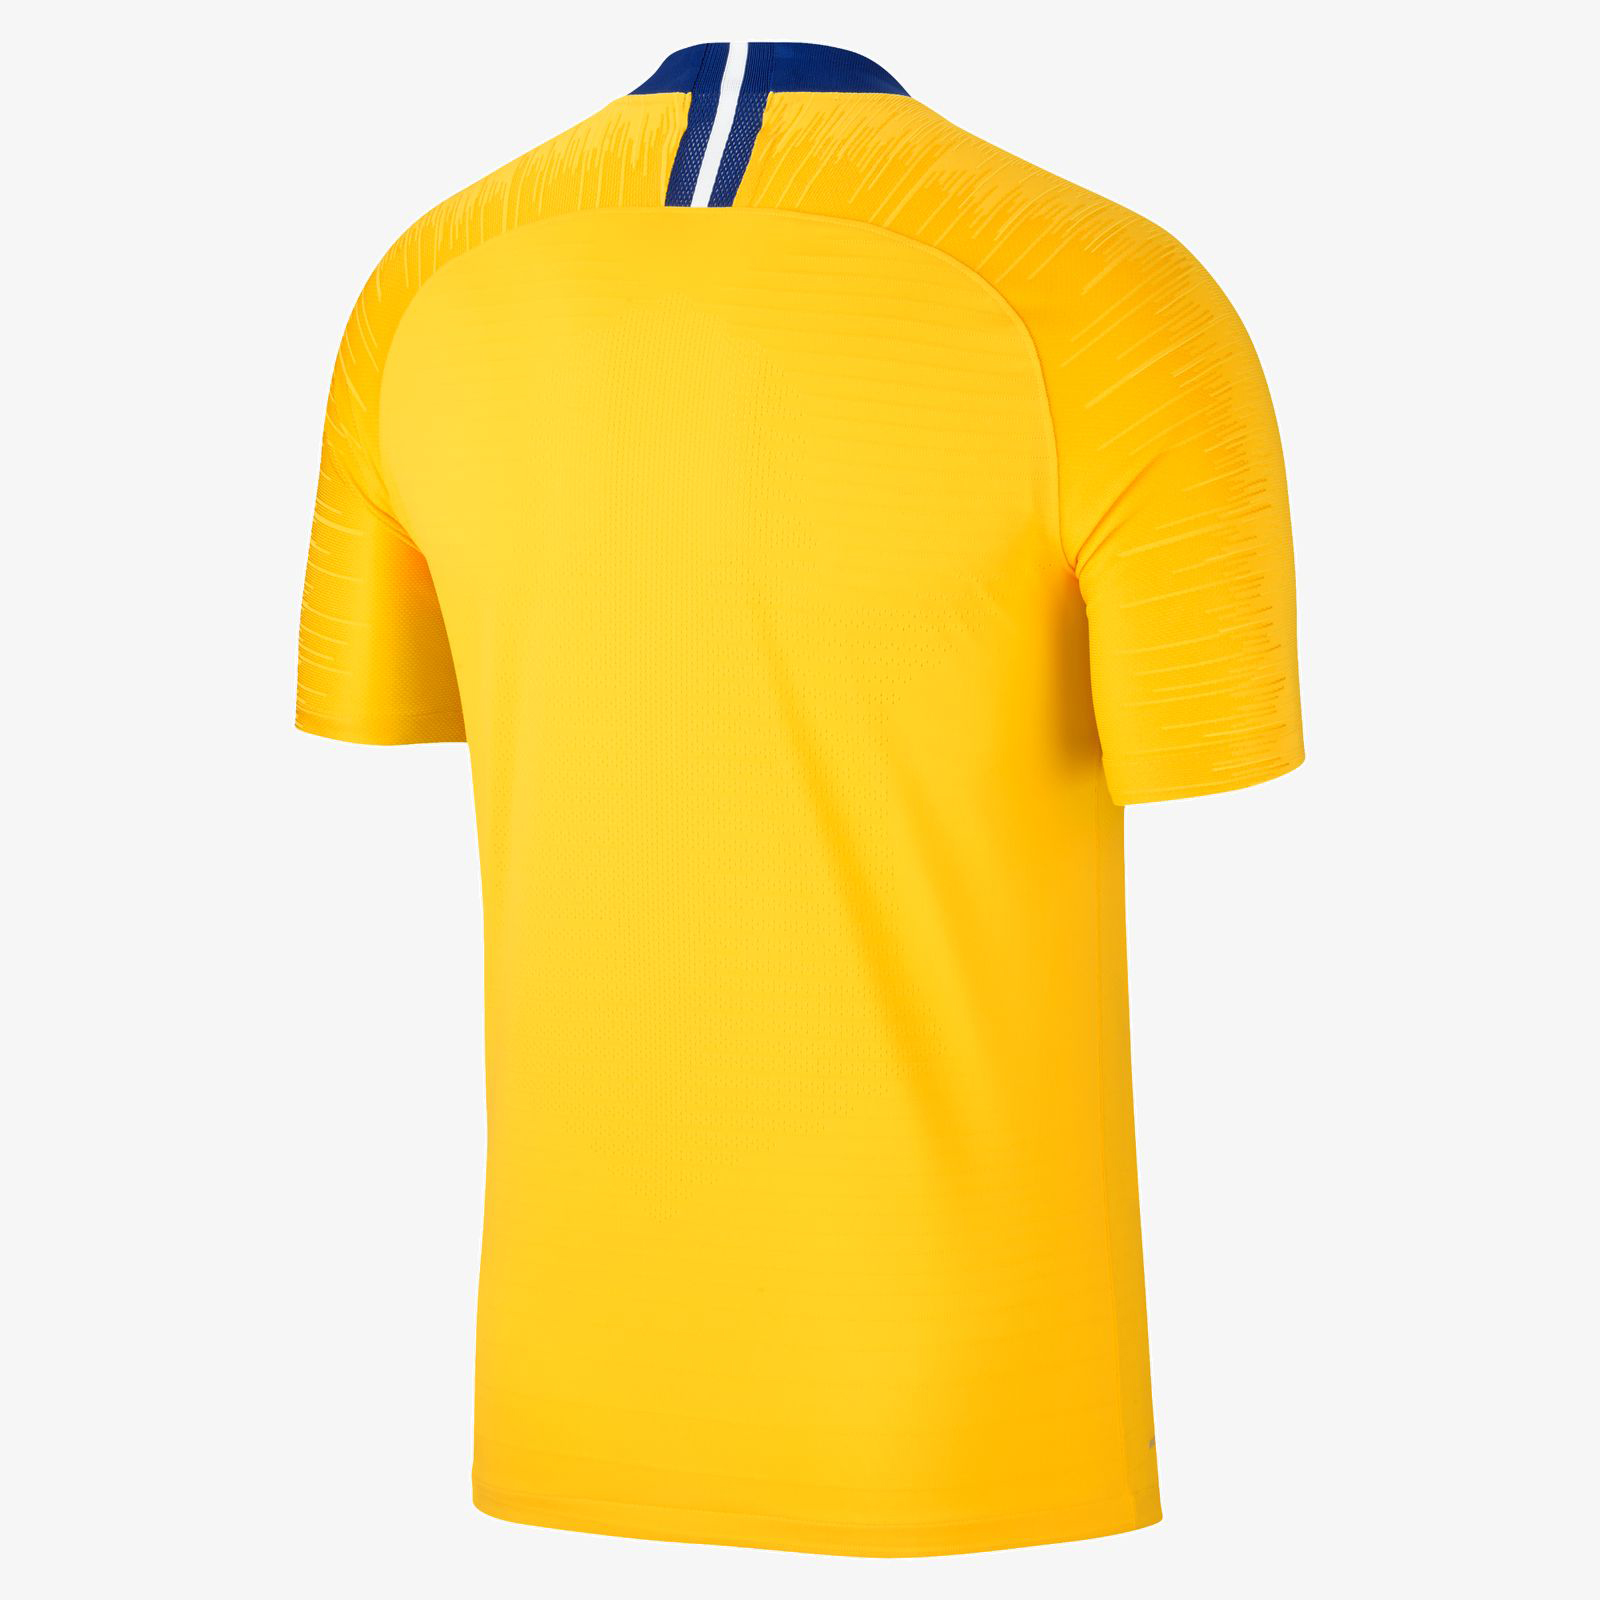 18-19 Chelsea Away Yellow Soccer Jersey Shirt